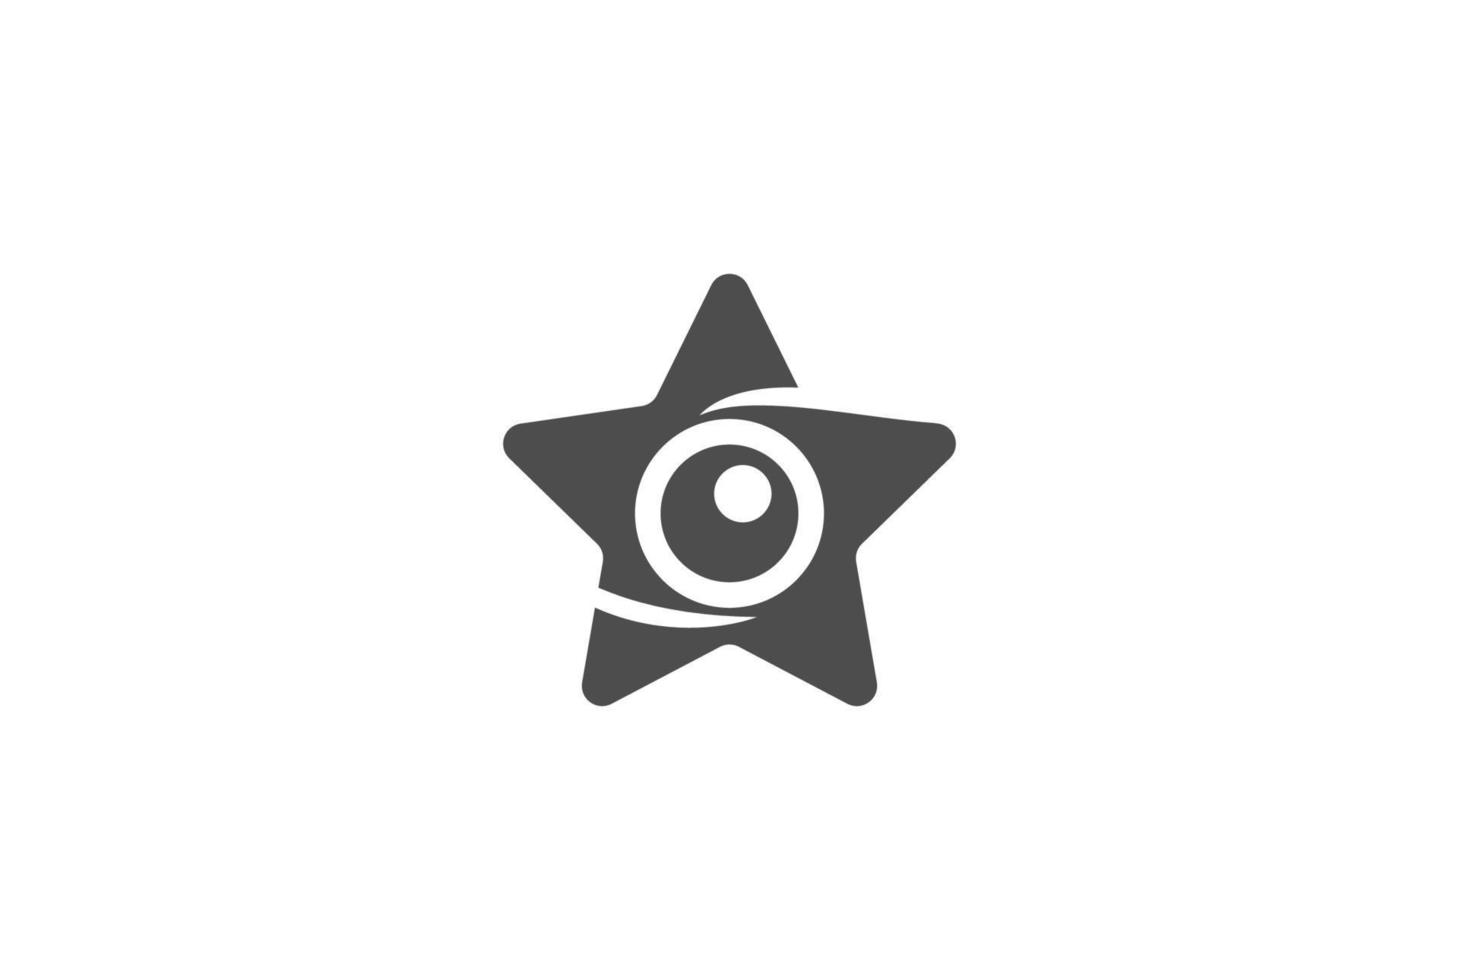 Simple Star with Eye Camera Vision Logo Design Vector